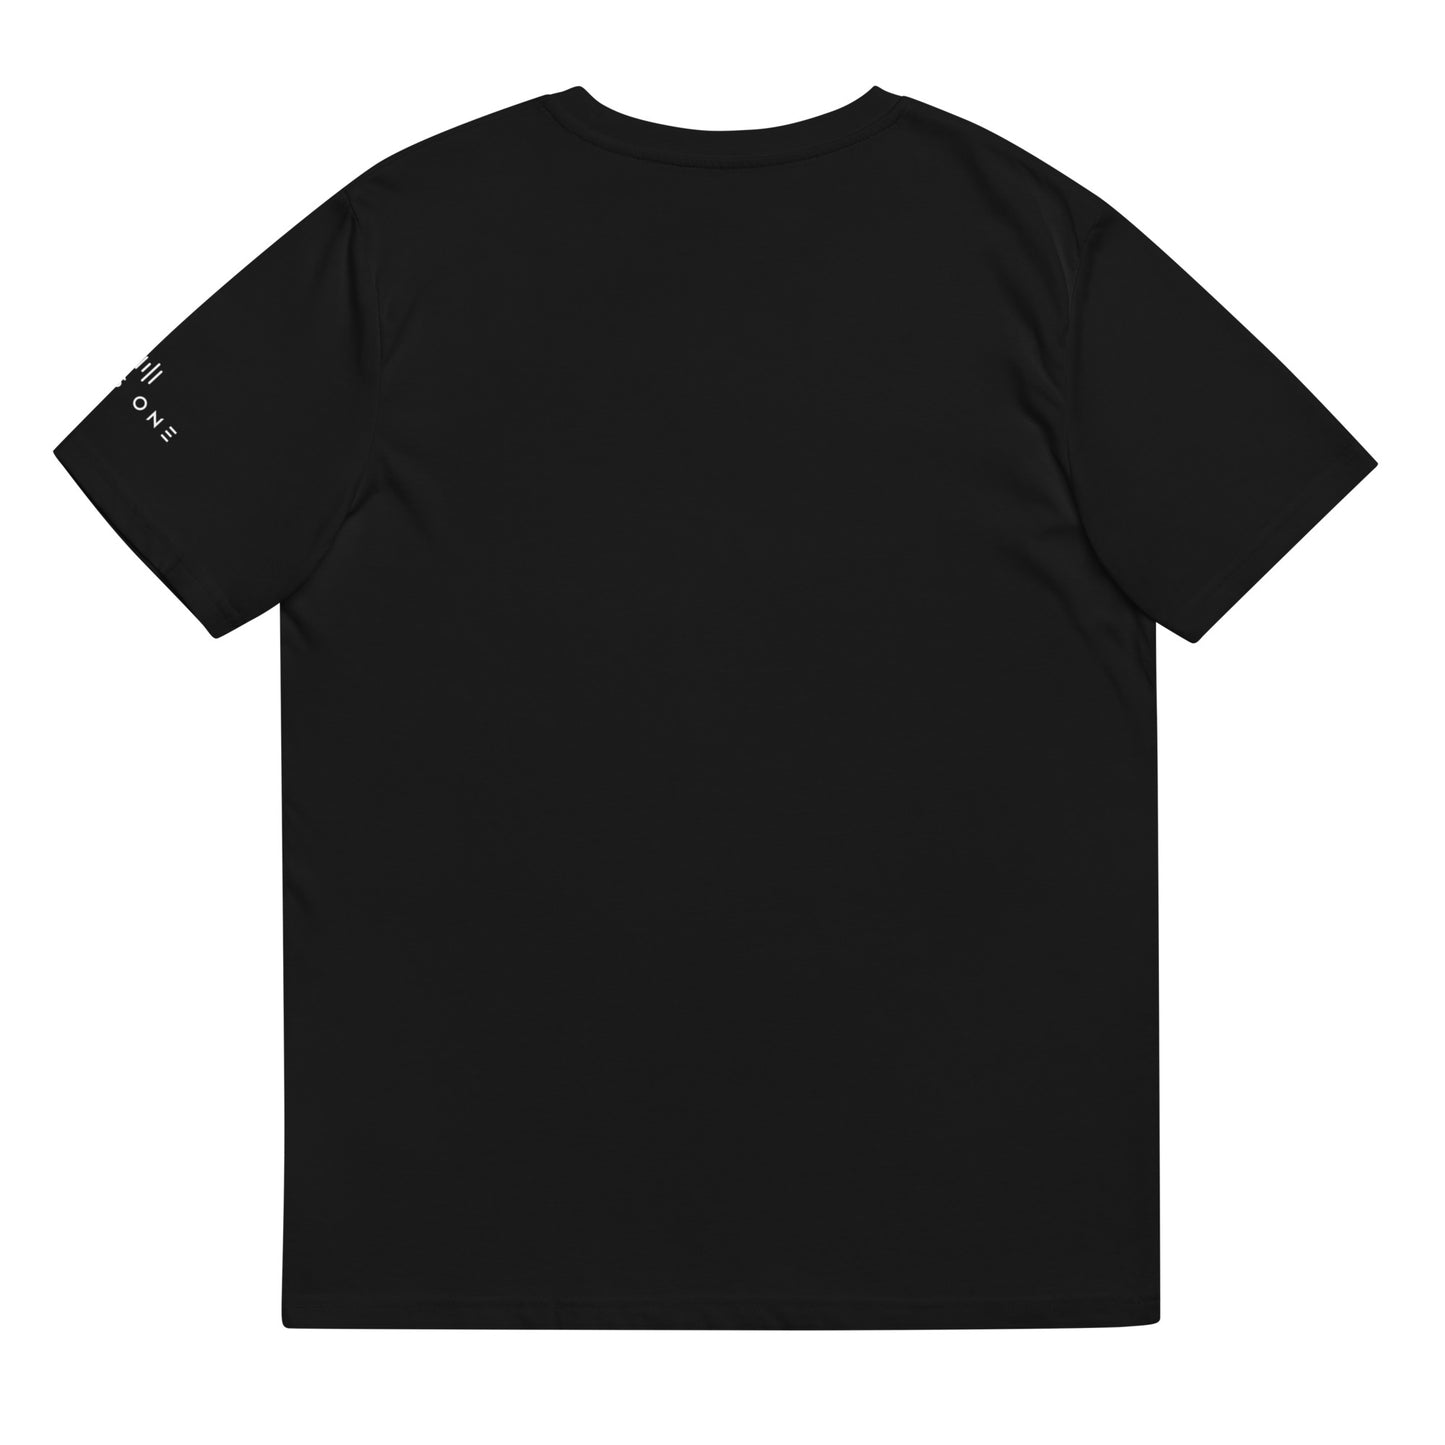 Ltd (Kitty Ninja v2) Unisex organic cotton t-shirt (White Text)